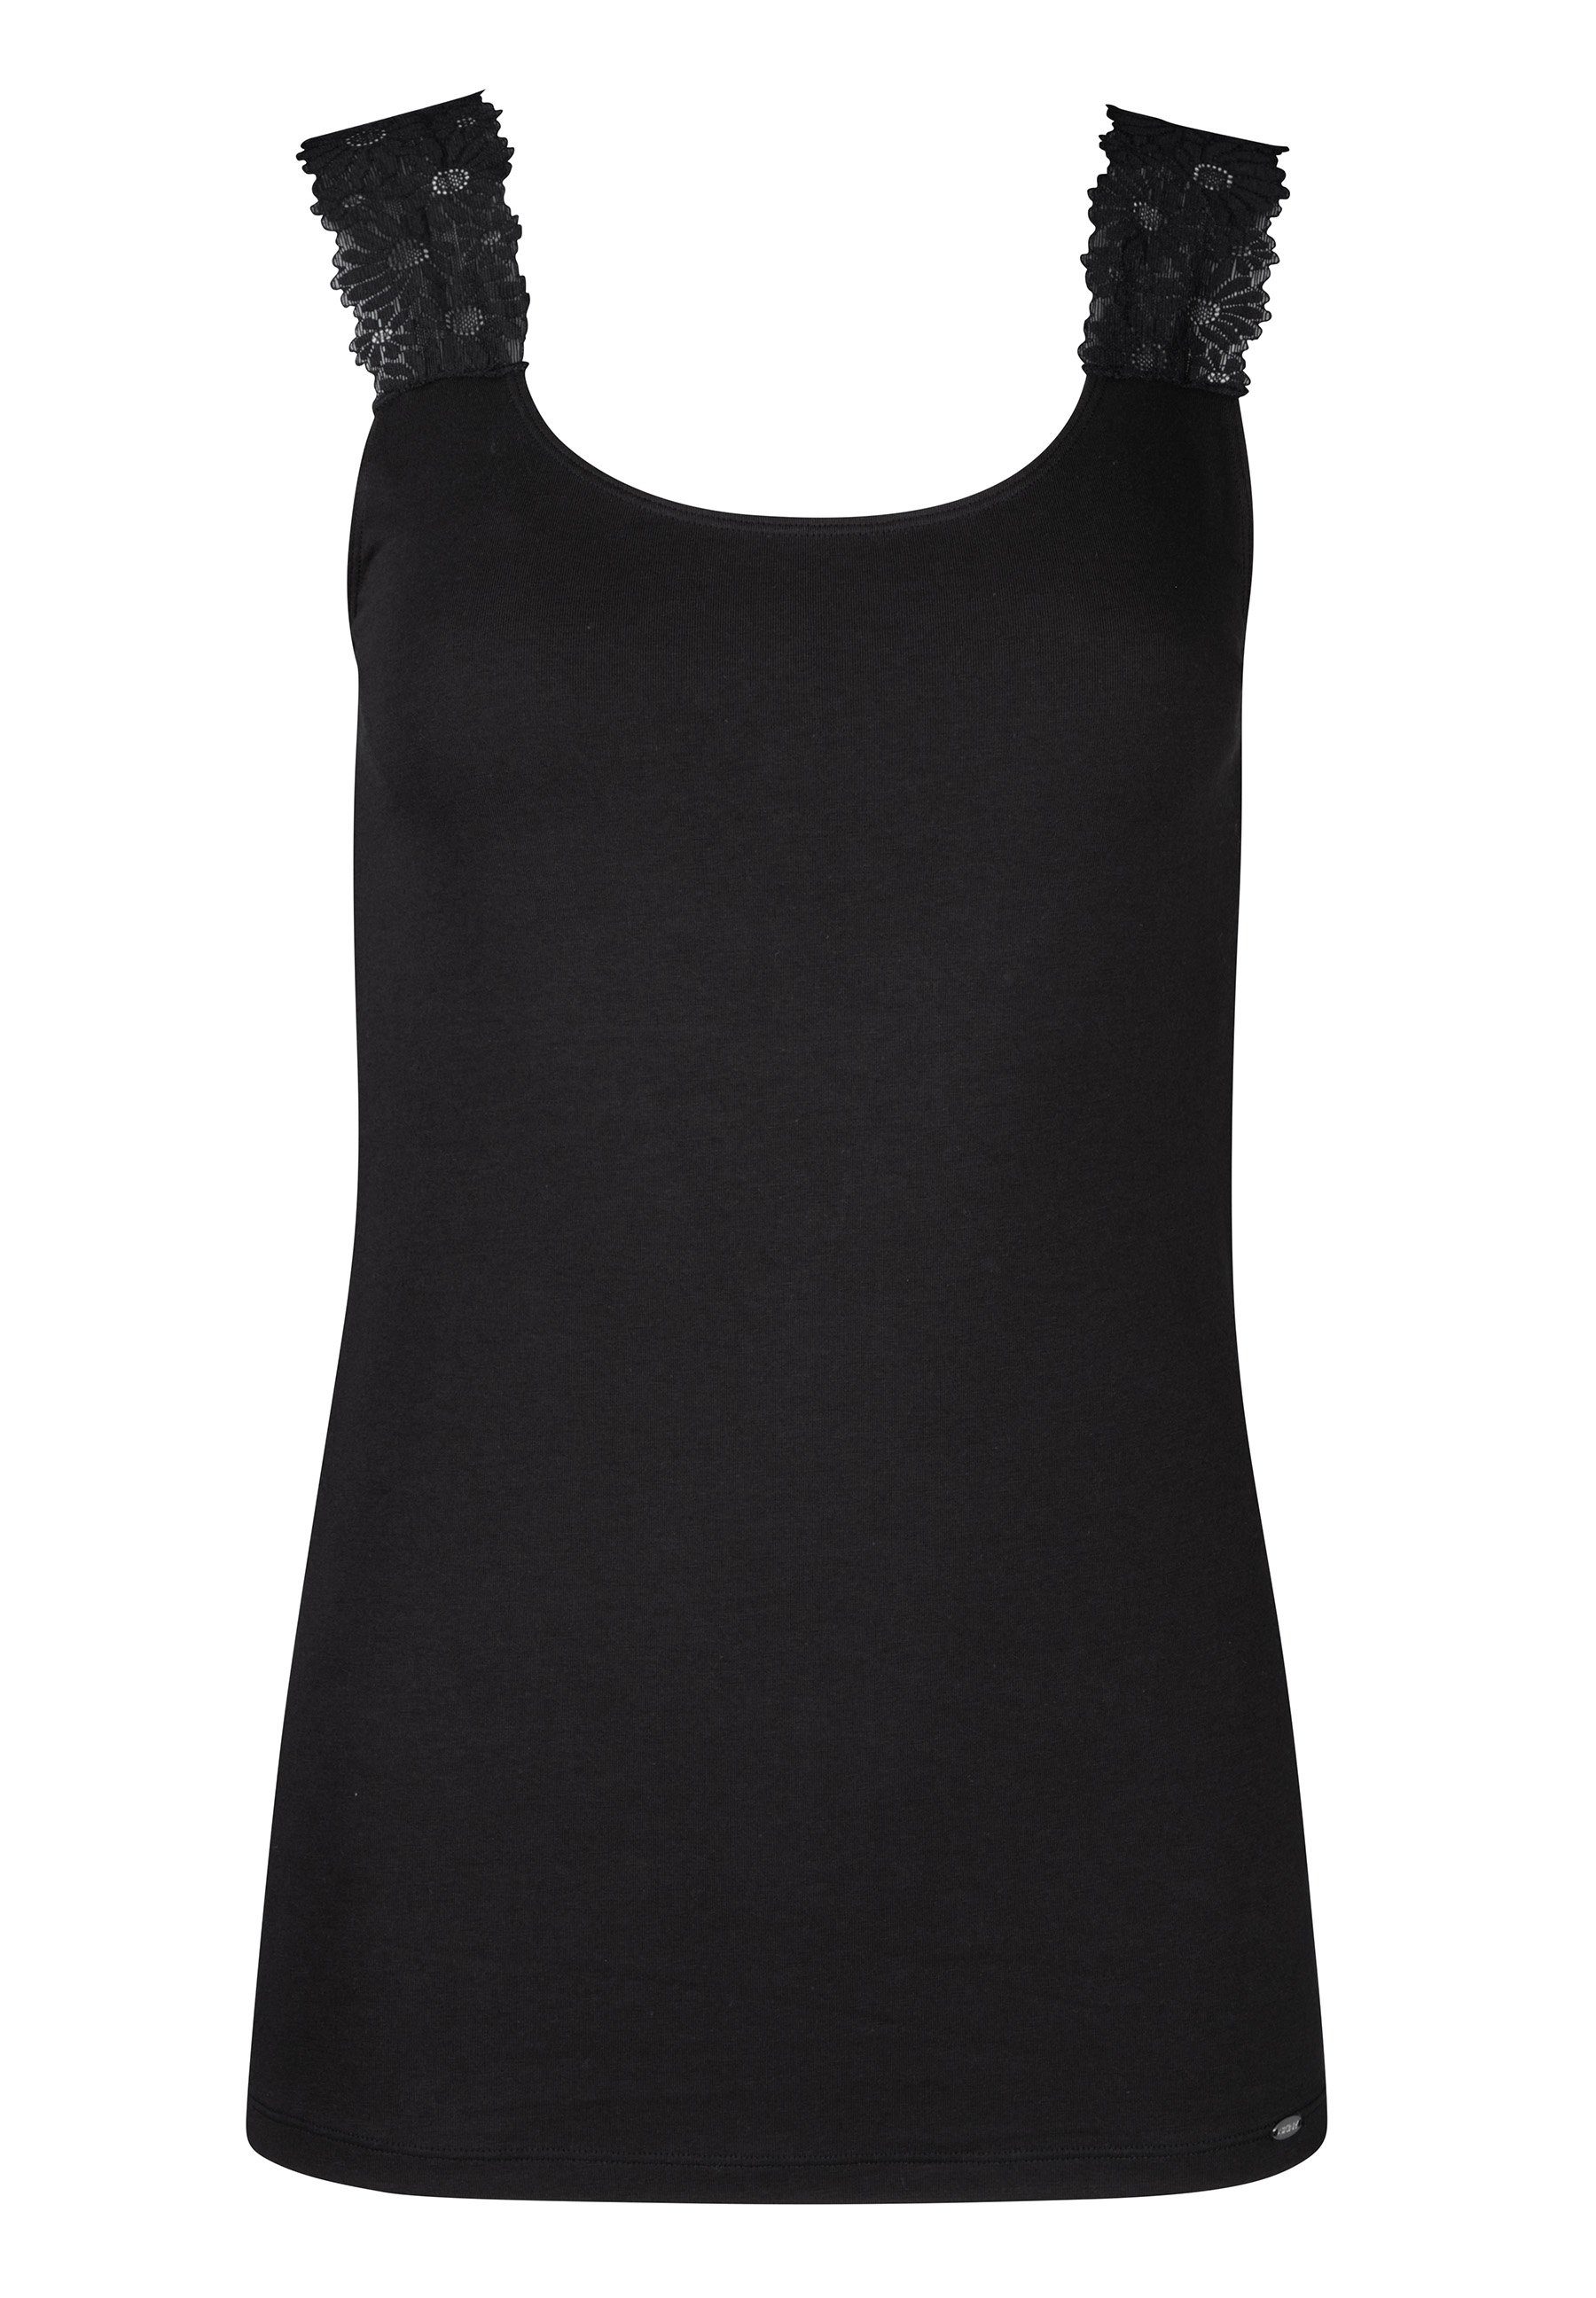 (1-St) black CottonLace Skiny Unterhemd Essentials